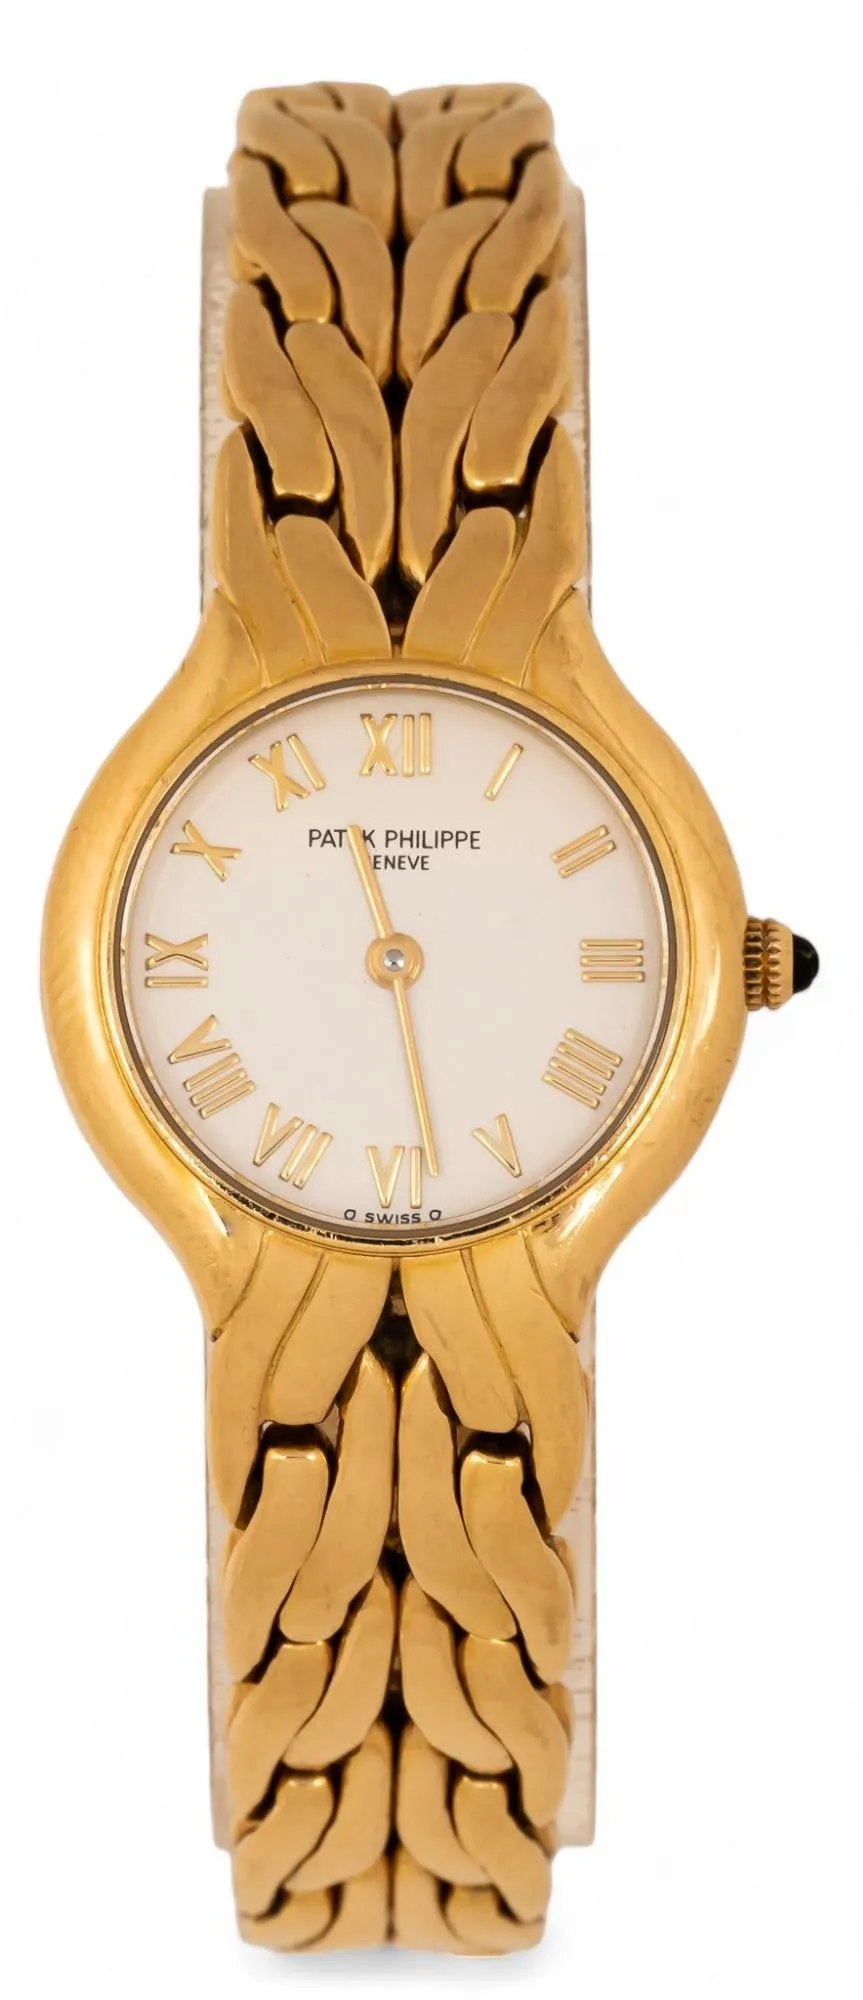 18K Yellow Gold Patek Philippe "La Flamme" Watch